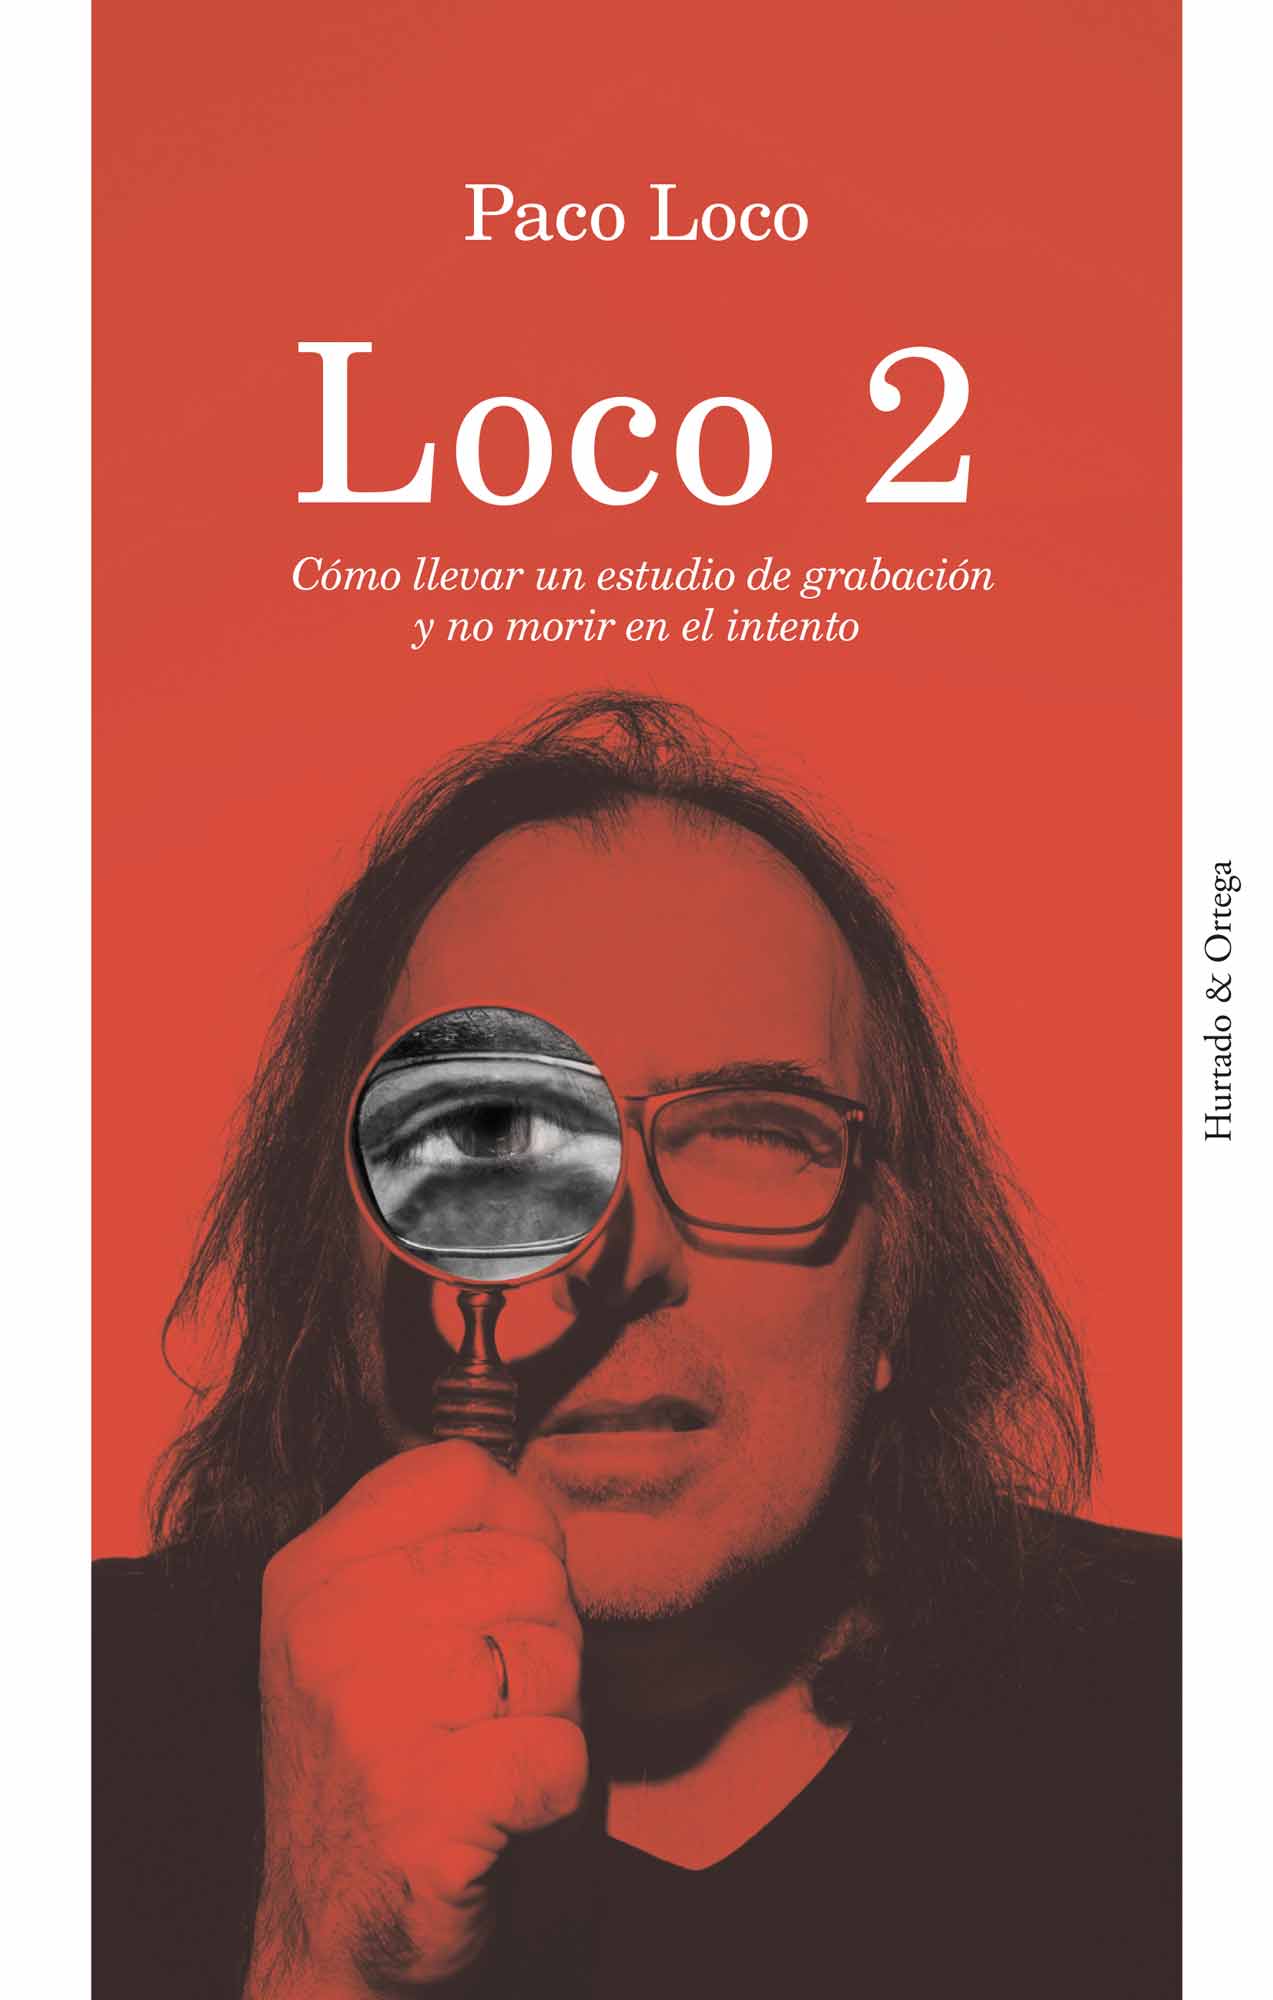 Paco Loco: «El indie soy yo» 1